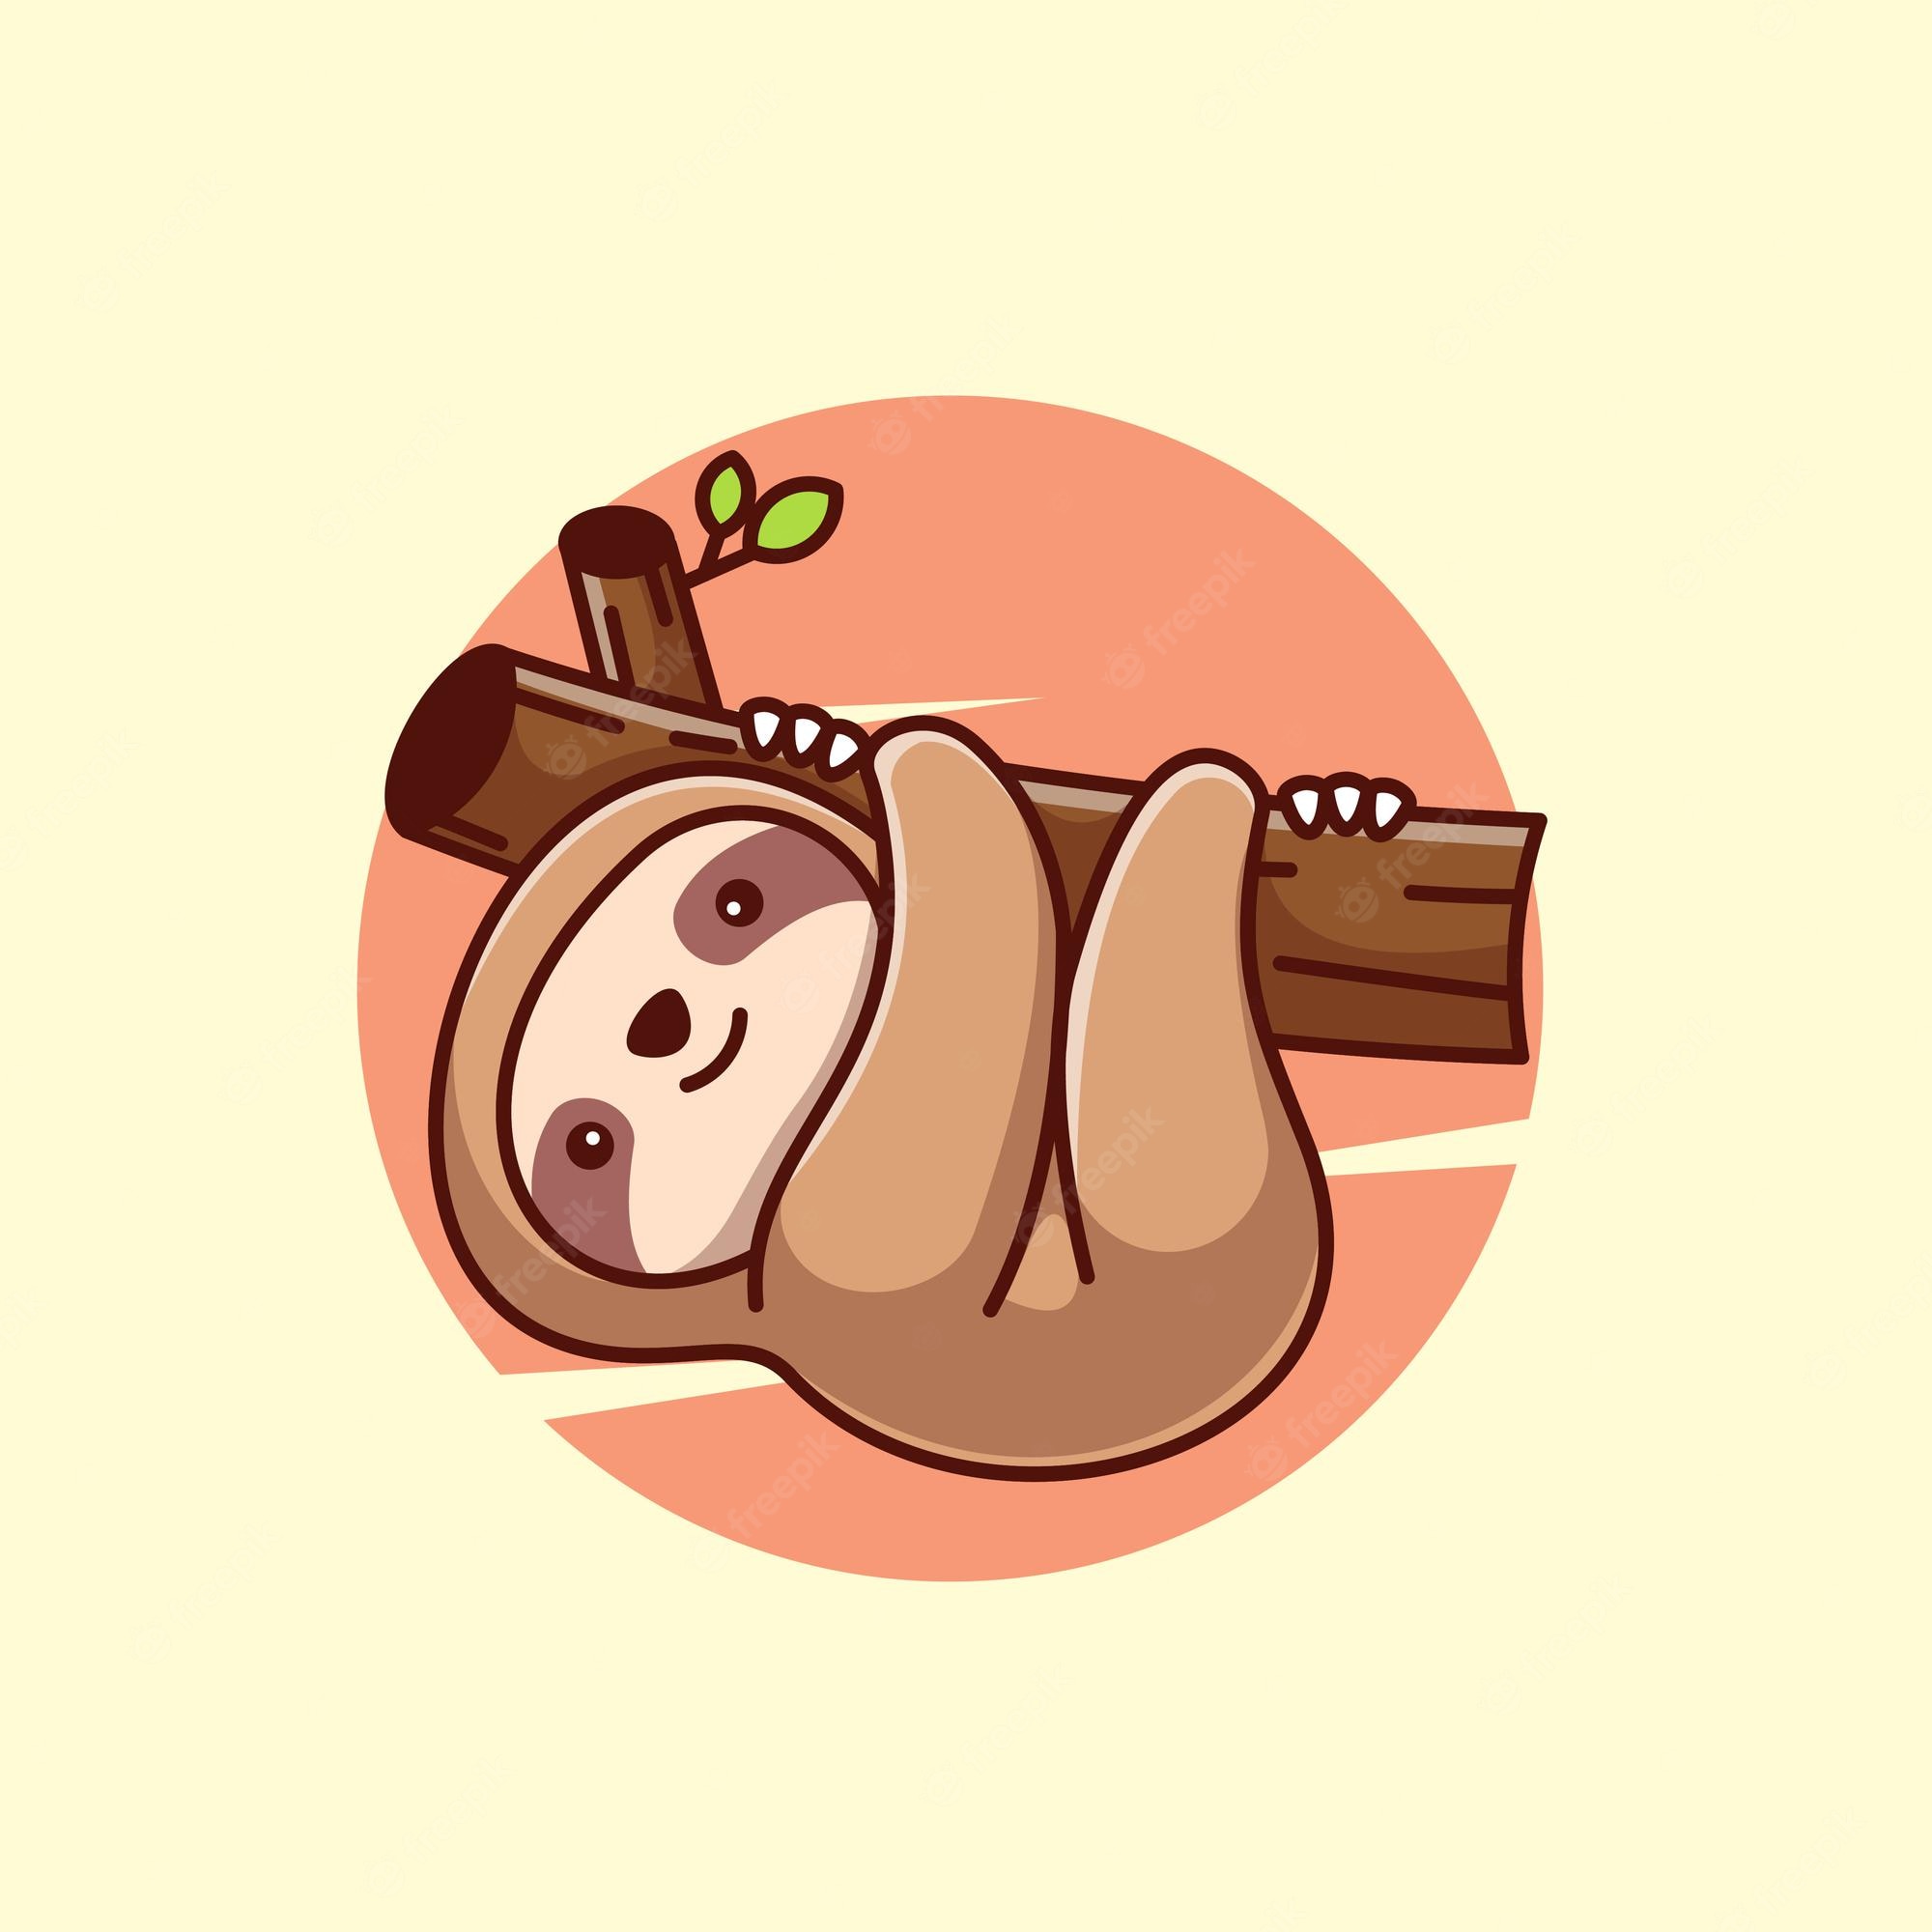 Kawaii Cute Cartoon Sloth Image